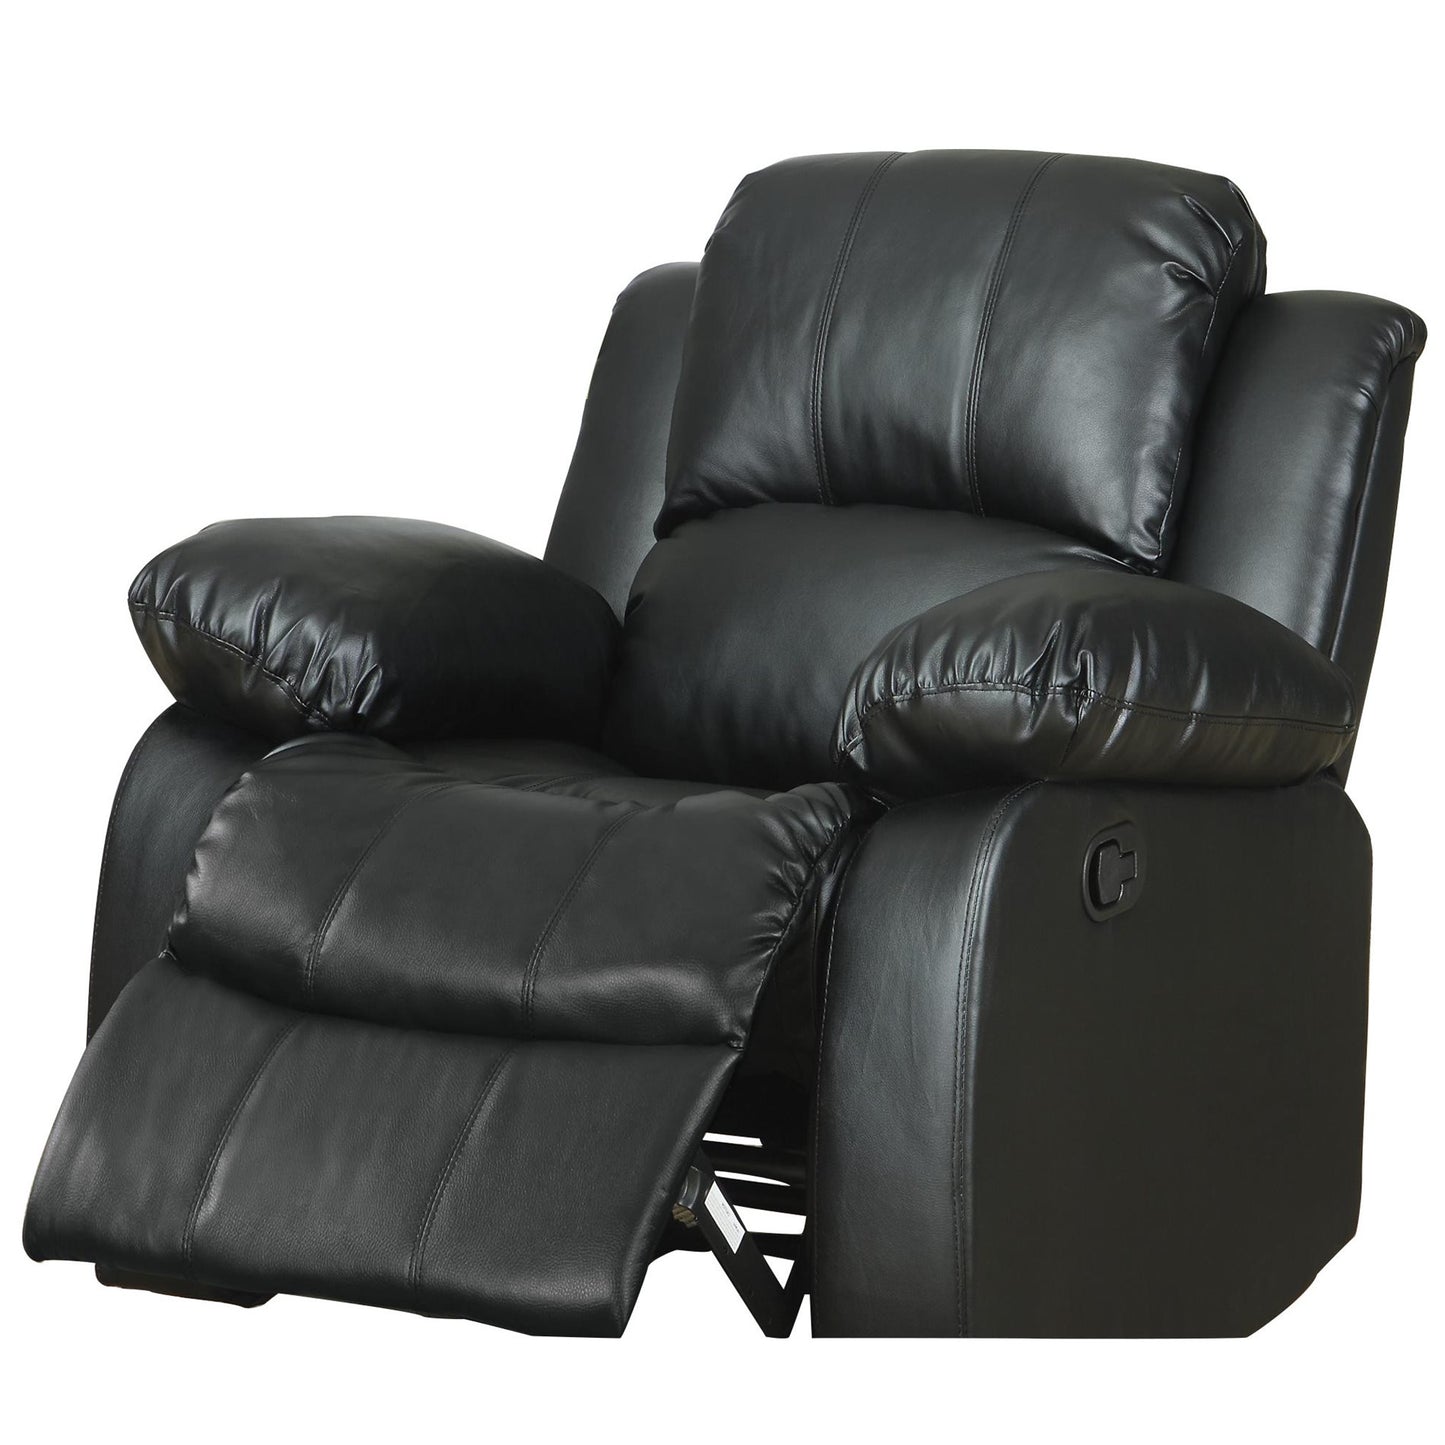 Homelegance Cranley Recliner Chair in Leather - Black